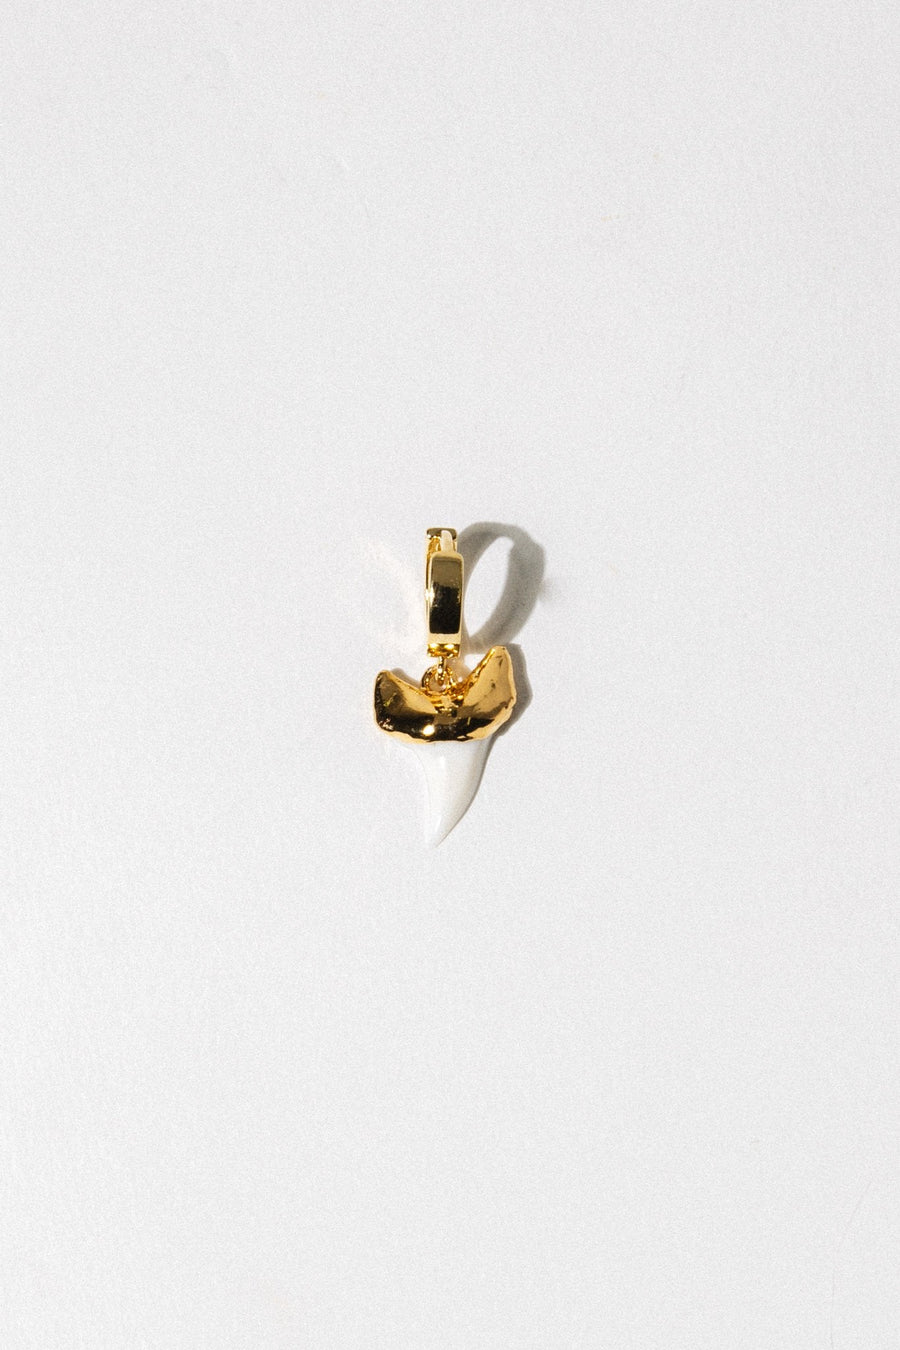 Dona Italia Jewelry Gold / Single Shark Tooth Gold Earring